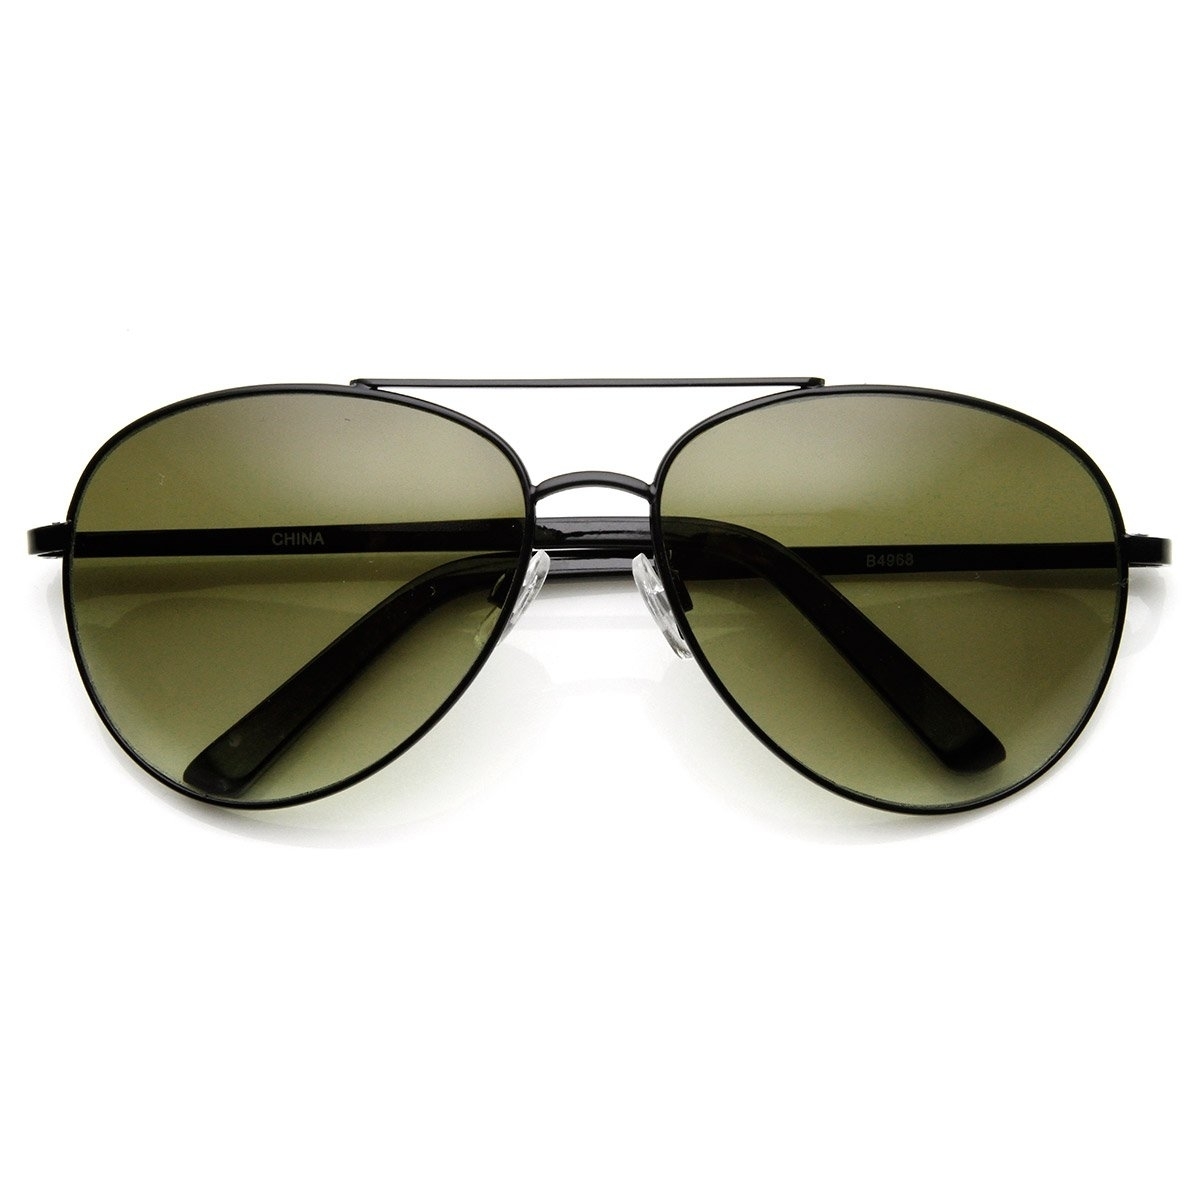 Unisex Round Metal Tear Drop Aviator Sunglasses - Black